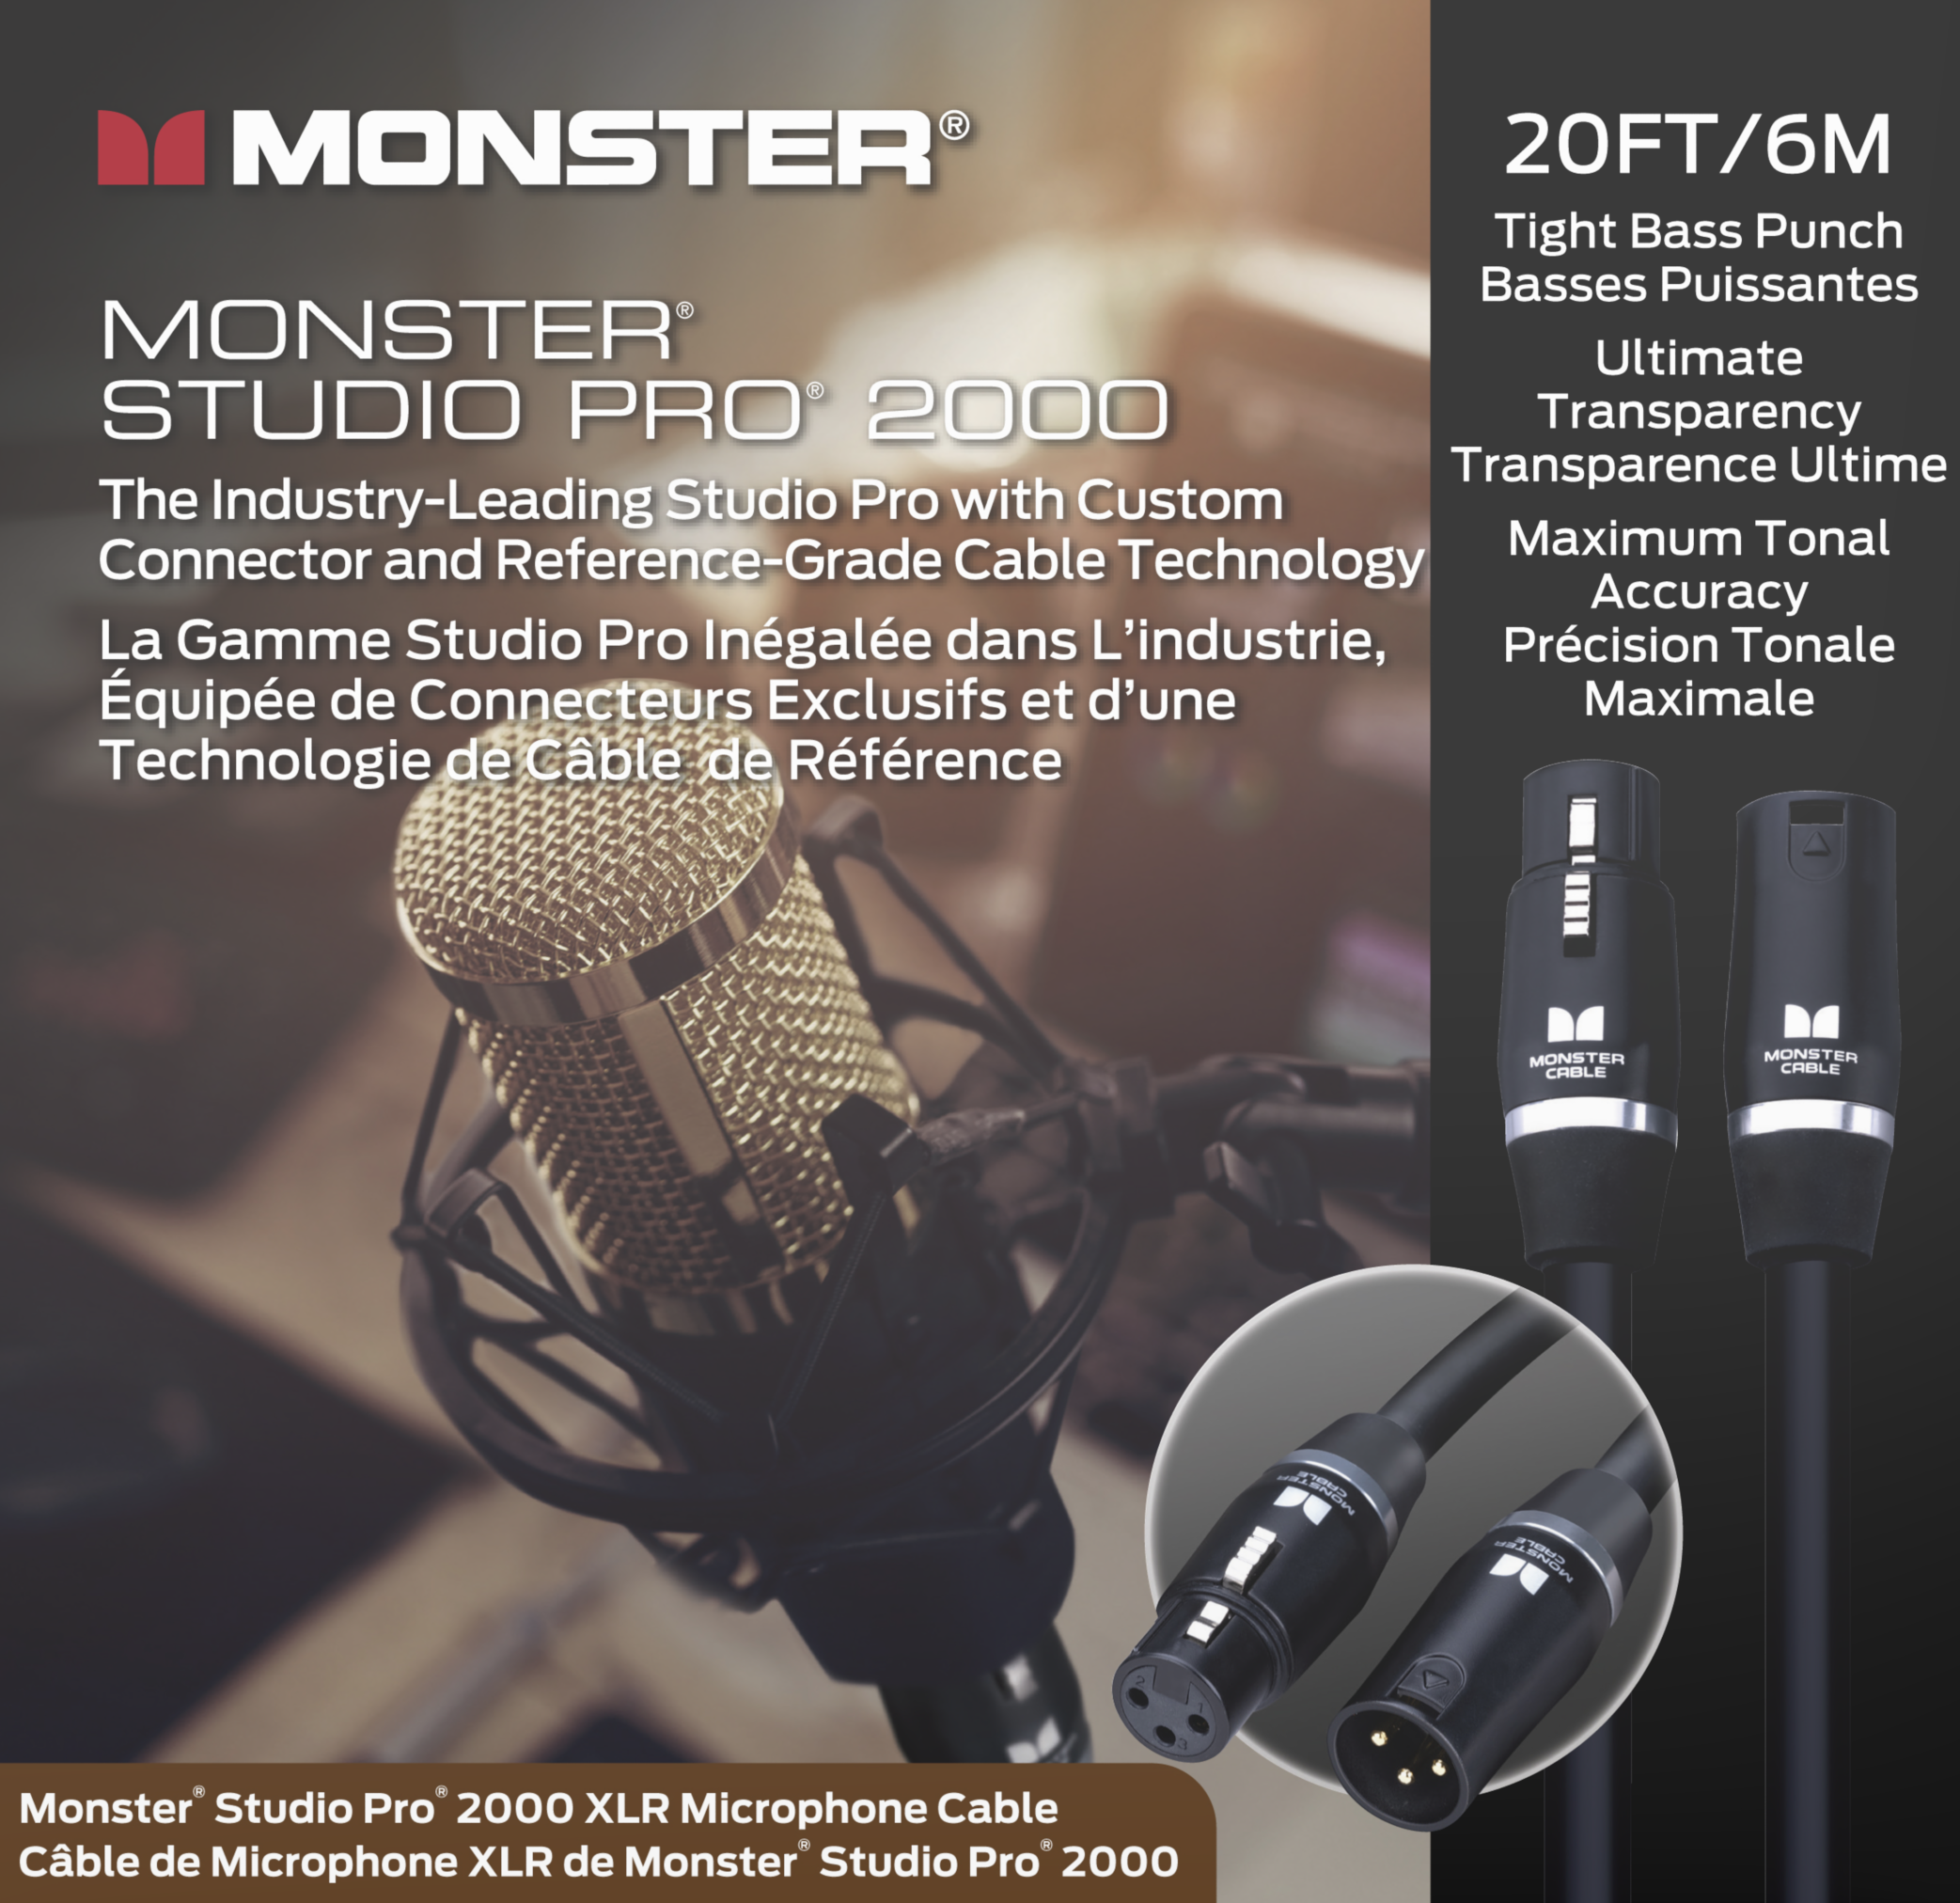 Monster® Prolink Studio Pro 2000 Microphone Cable - HIENDGUITAR 20ft(6m) 20ft(6m) Monstercable Cable